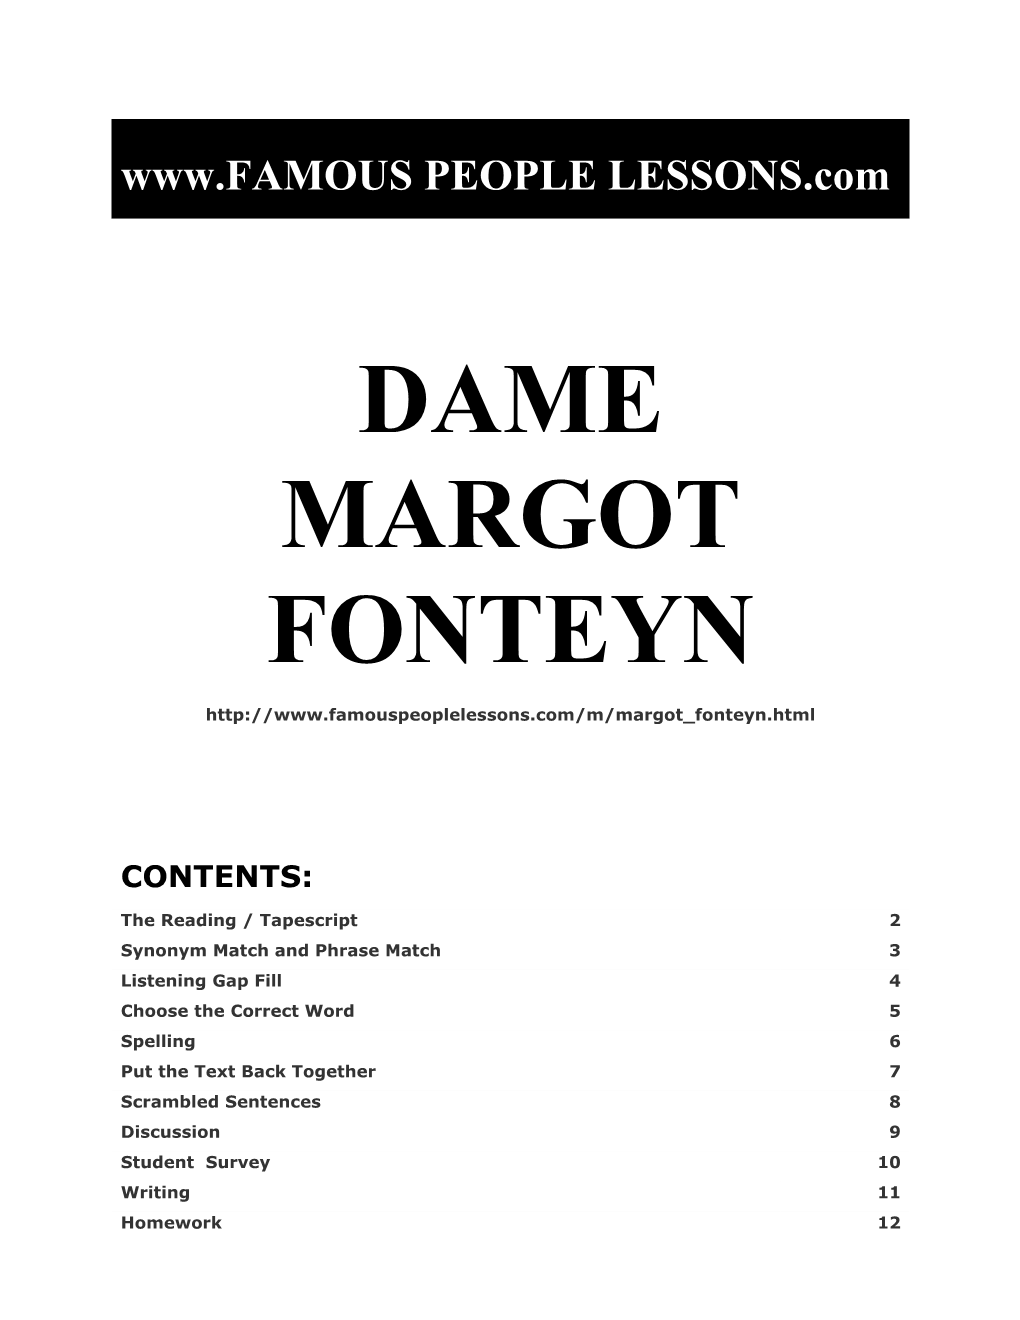 Famous People Lessons - Dame Margot Fonteyn